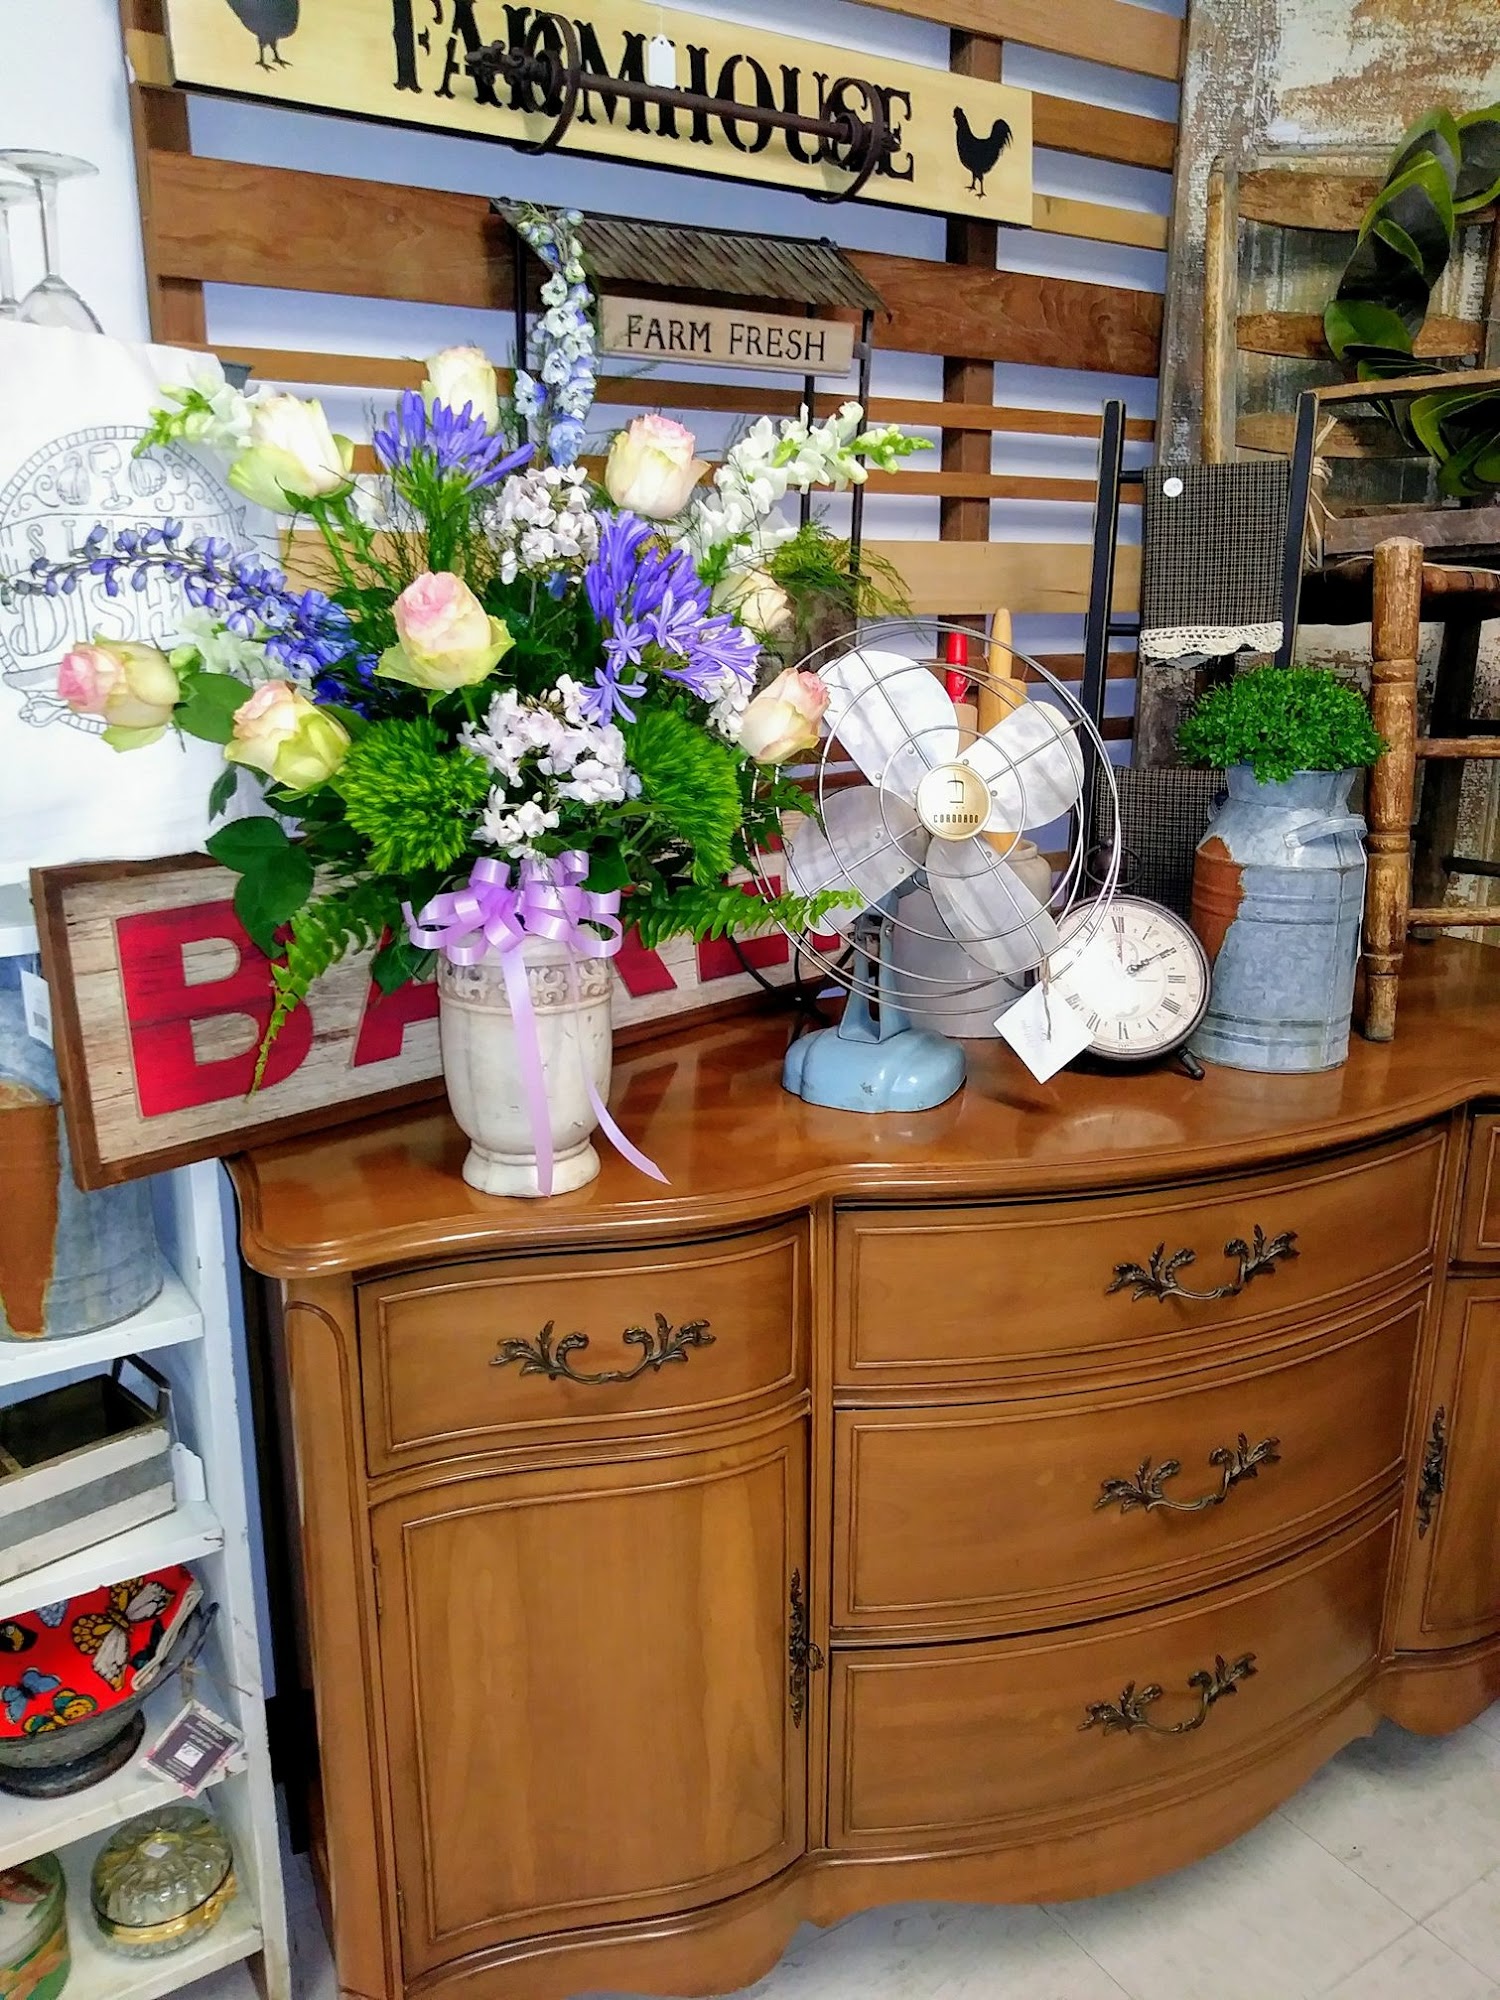 Debbie Kay's Floral and Vintage Market 1214 S Park St, El Dorado Springs Missouri 64744